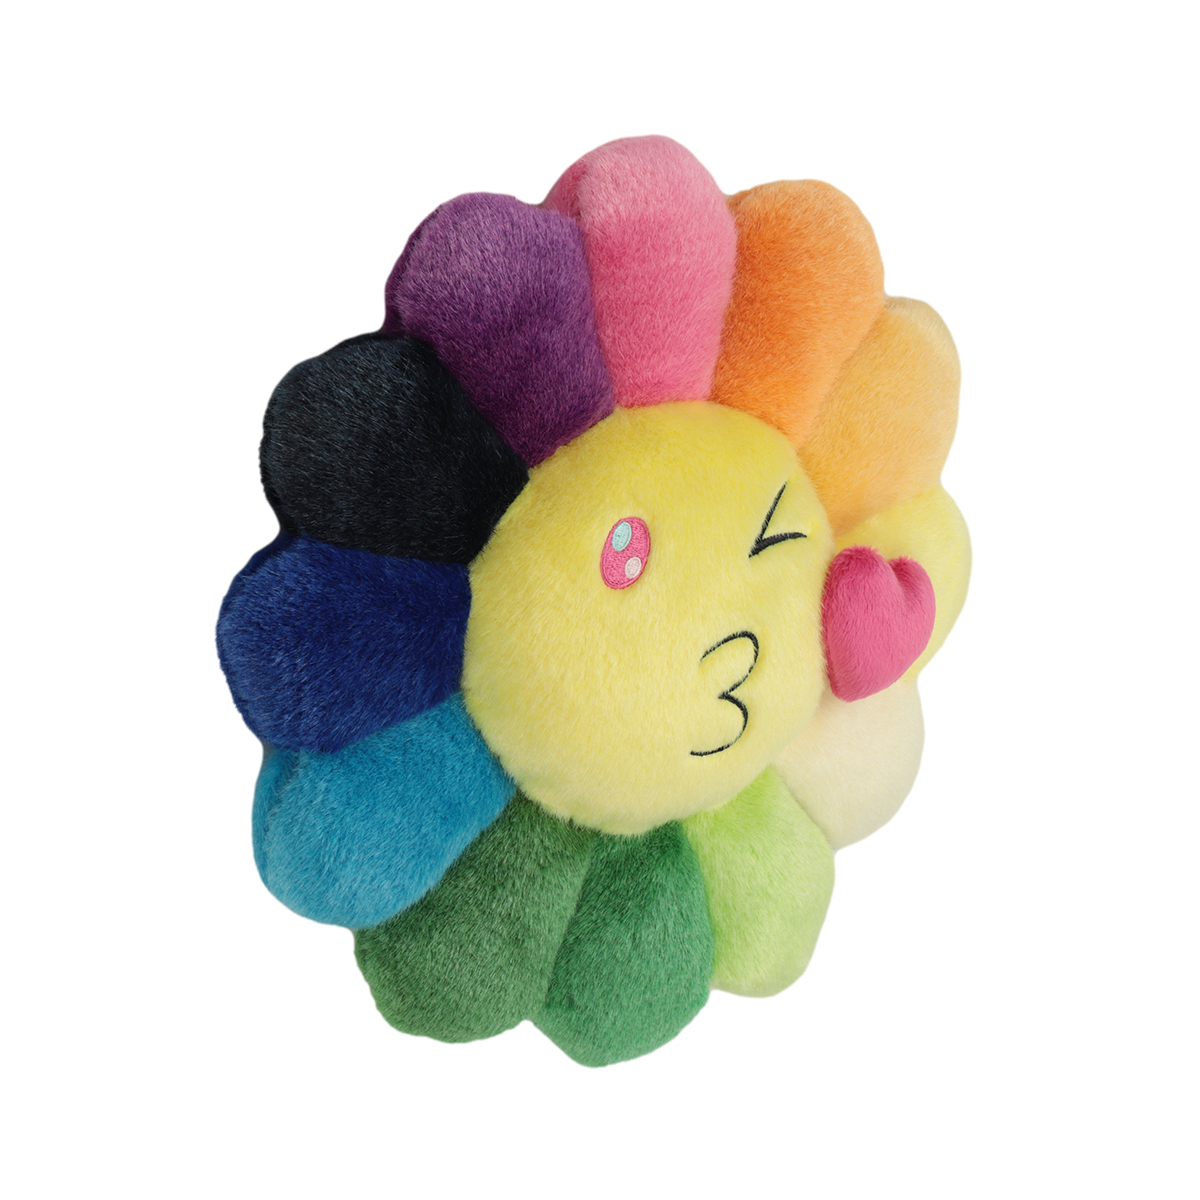 Buy Takashi Murakami Flower Keychain Emoji 3 Online in Australia